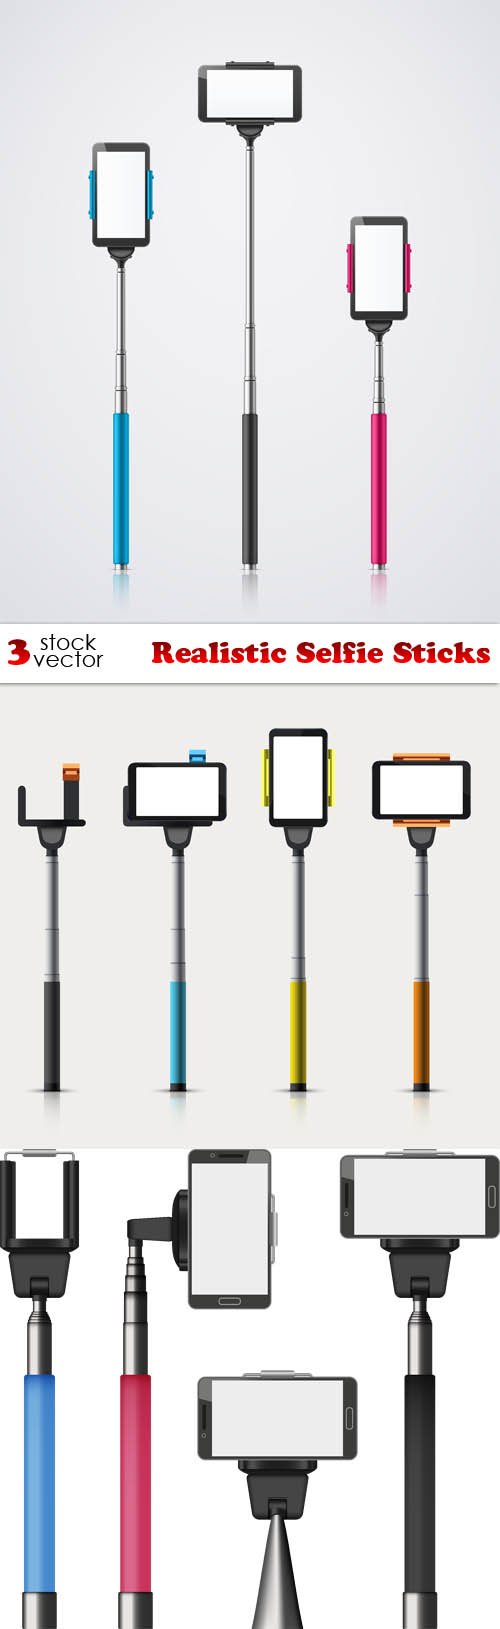 Vectors - Realistic Selfie Sticks